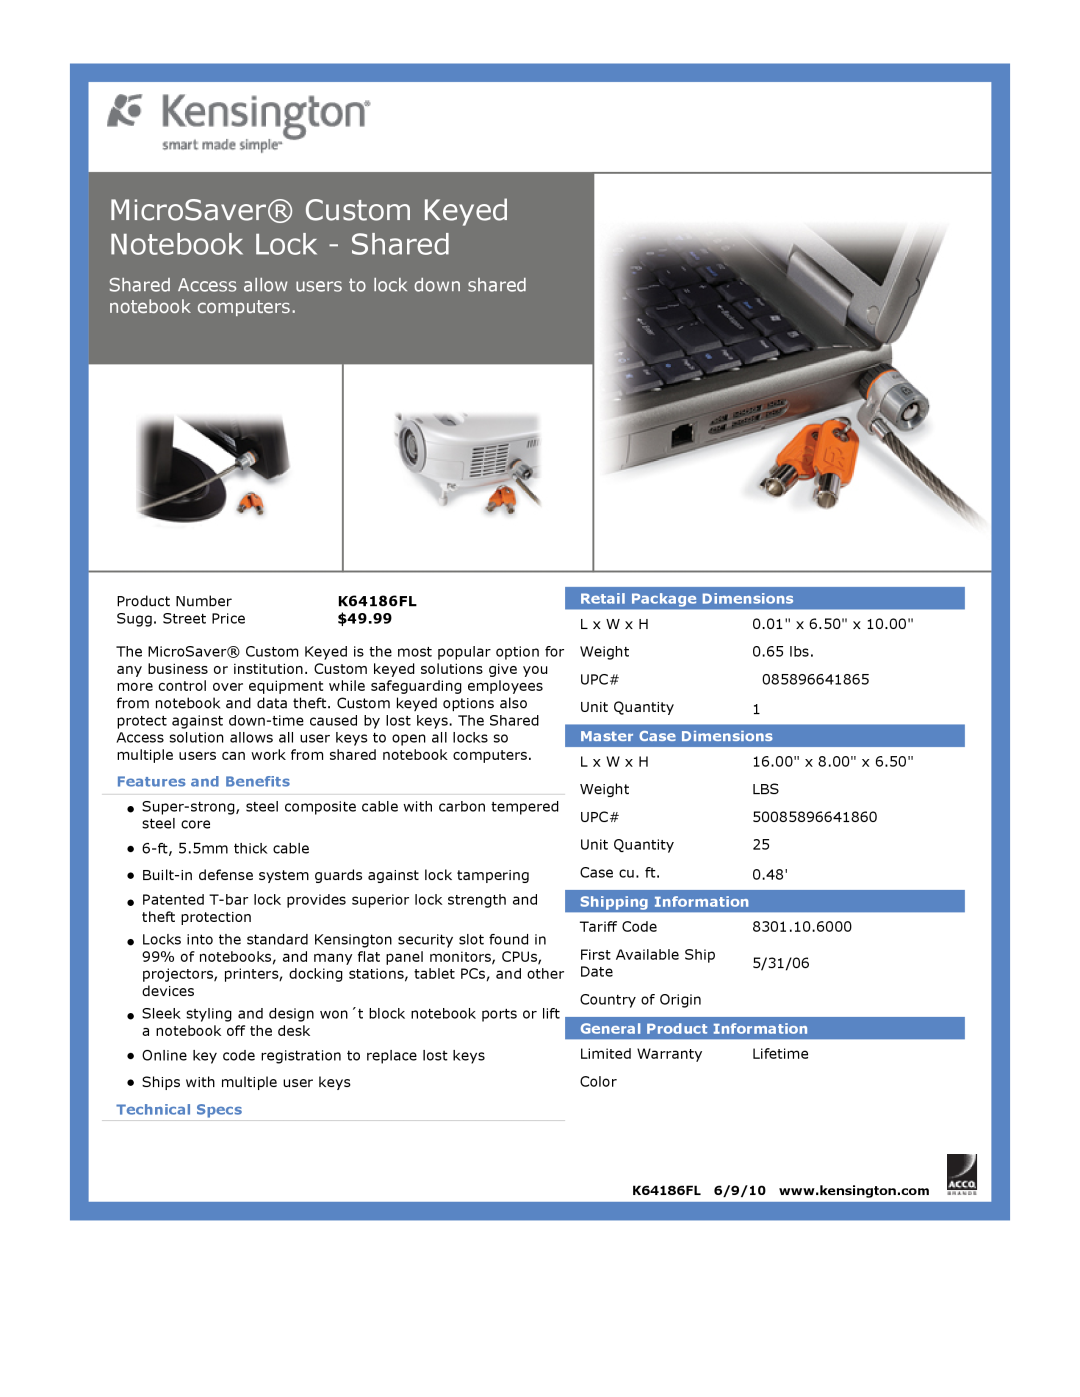 Kensington EU64325 MicroSaver Custom Keyed Notebook Lock - Shared, $49.99, Features and Benefits, Technical Specs 